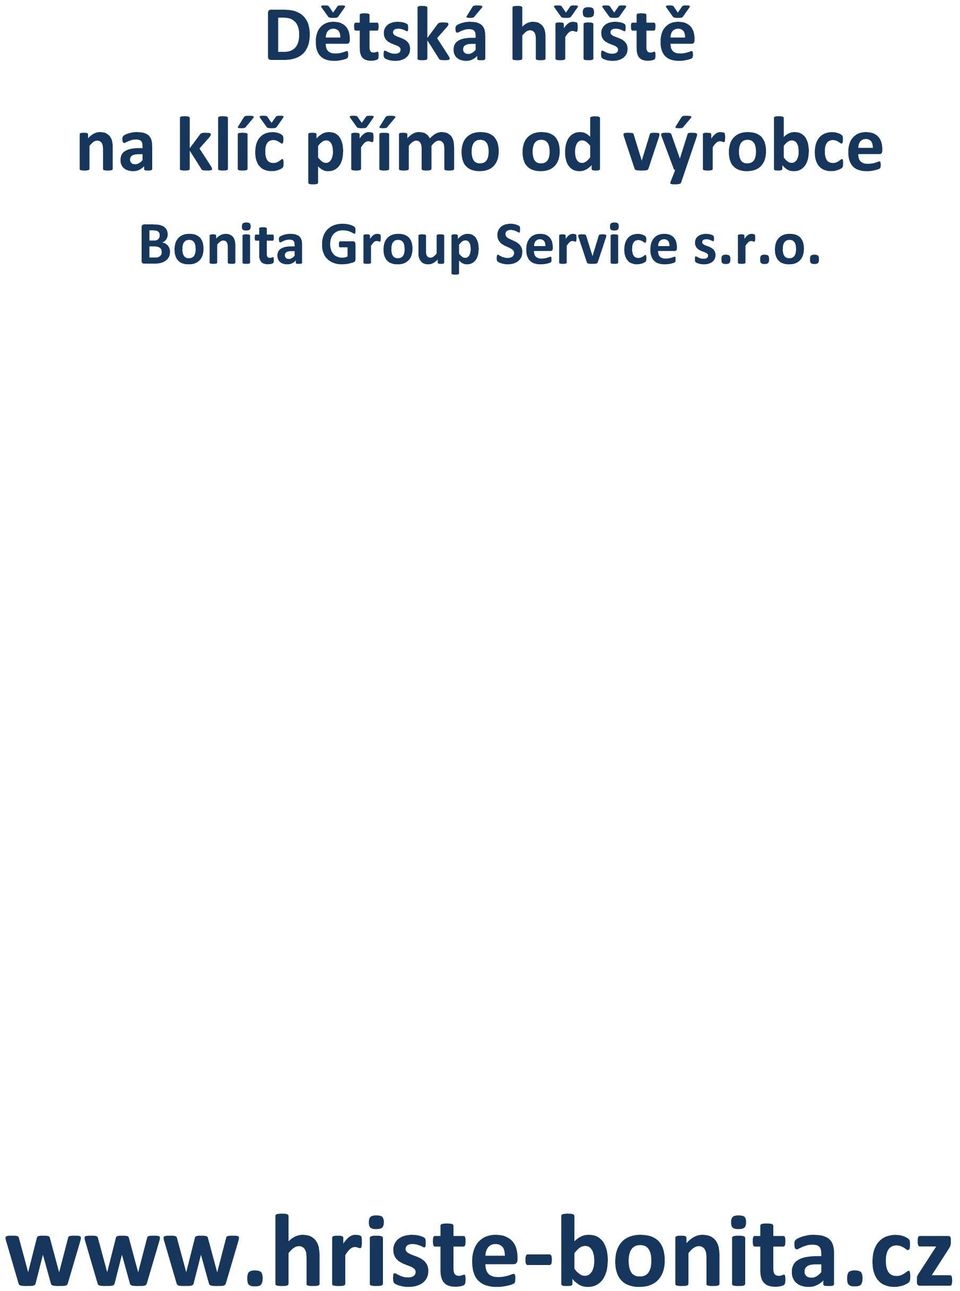 Bonita Group Service